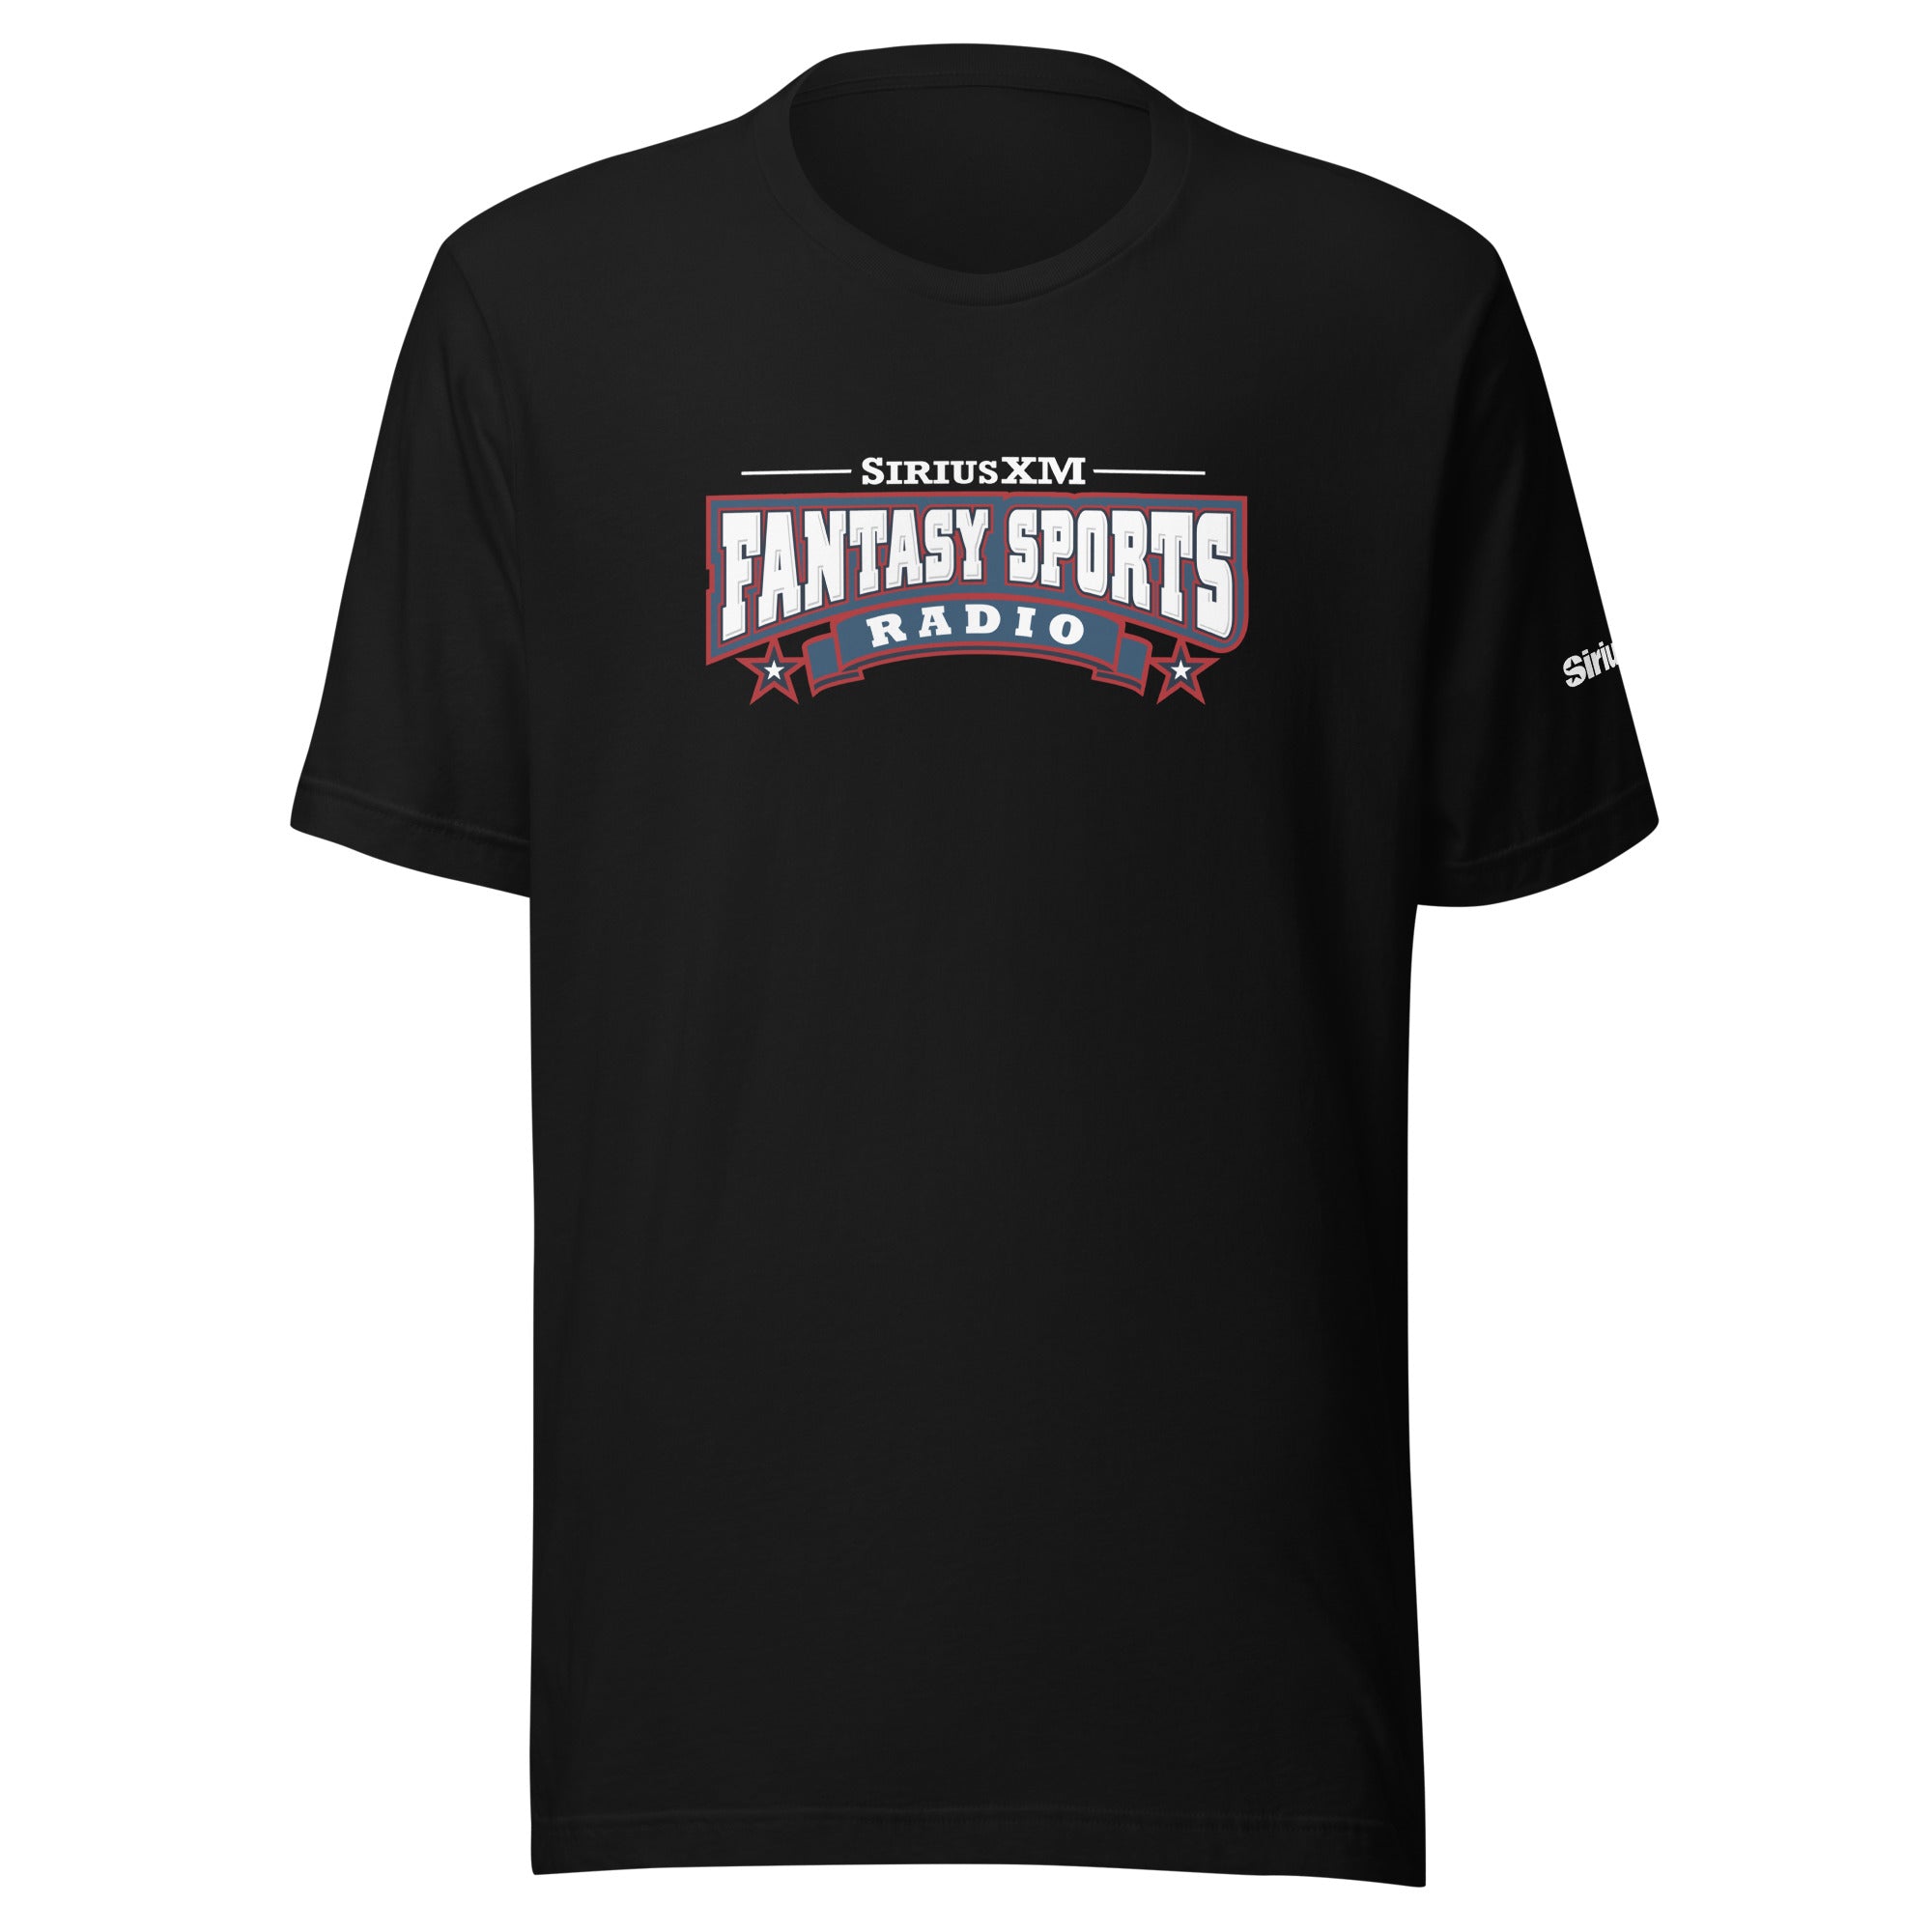 Fantasy Sports Radio: T-shirt (Black)